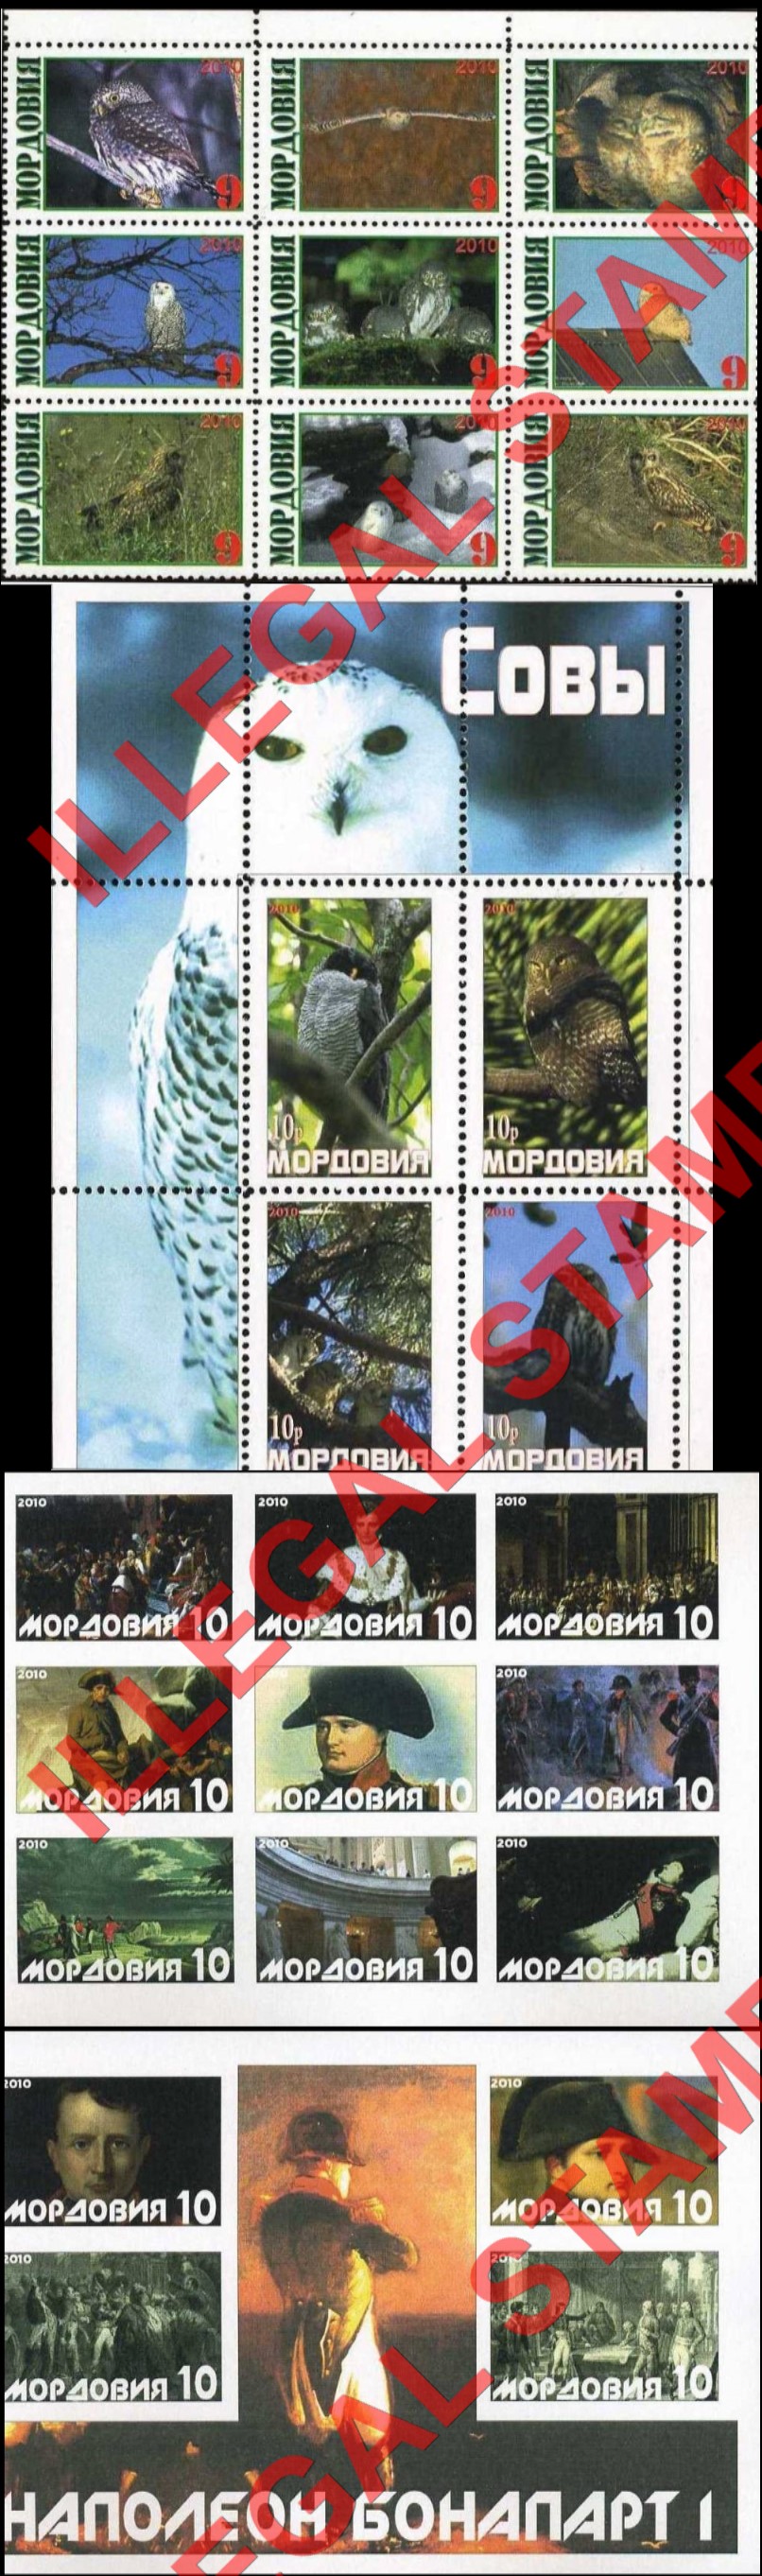 Republic of Mordovia 2010 Counterfeit Illegal Stamps